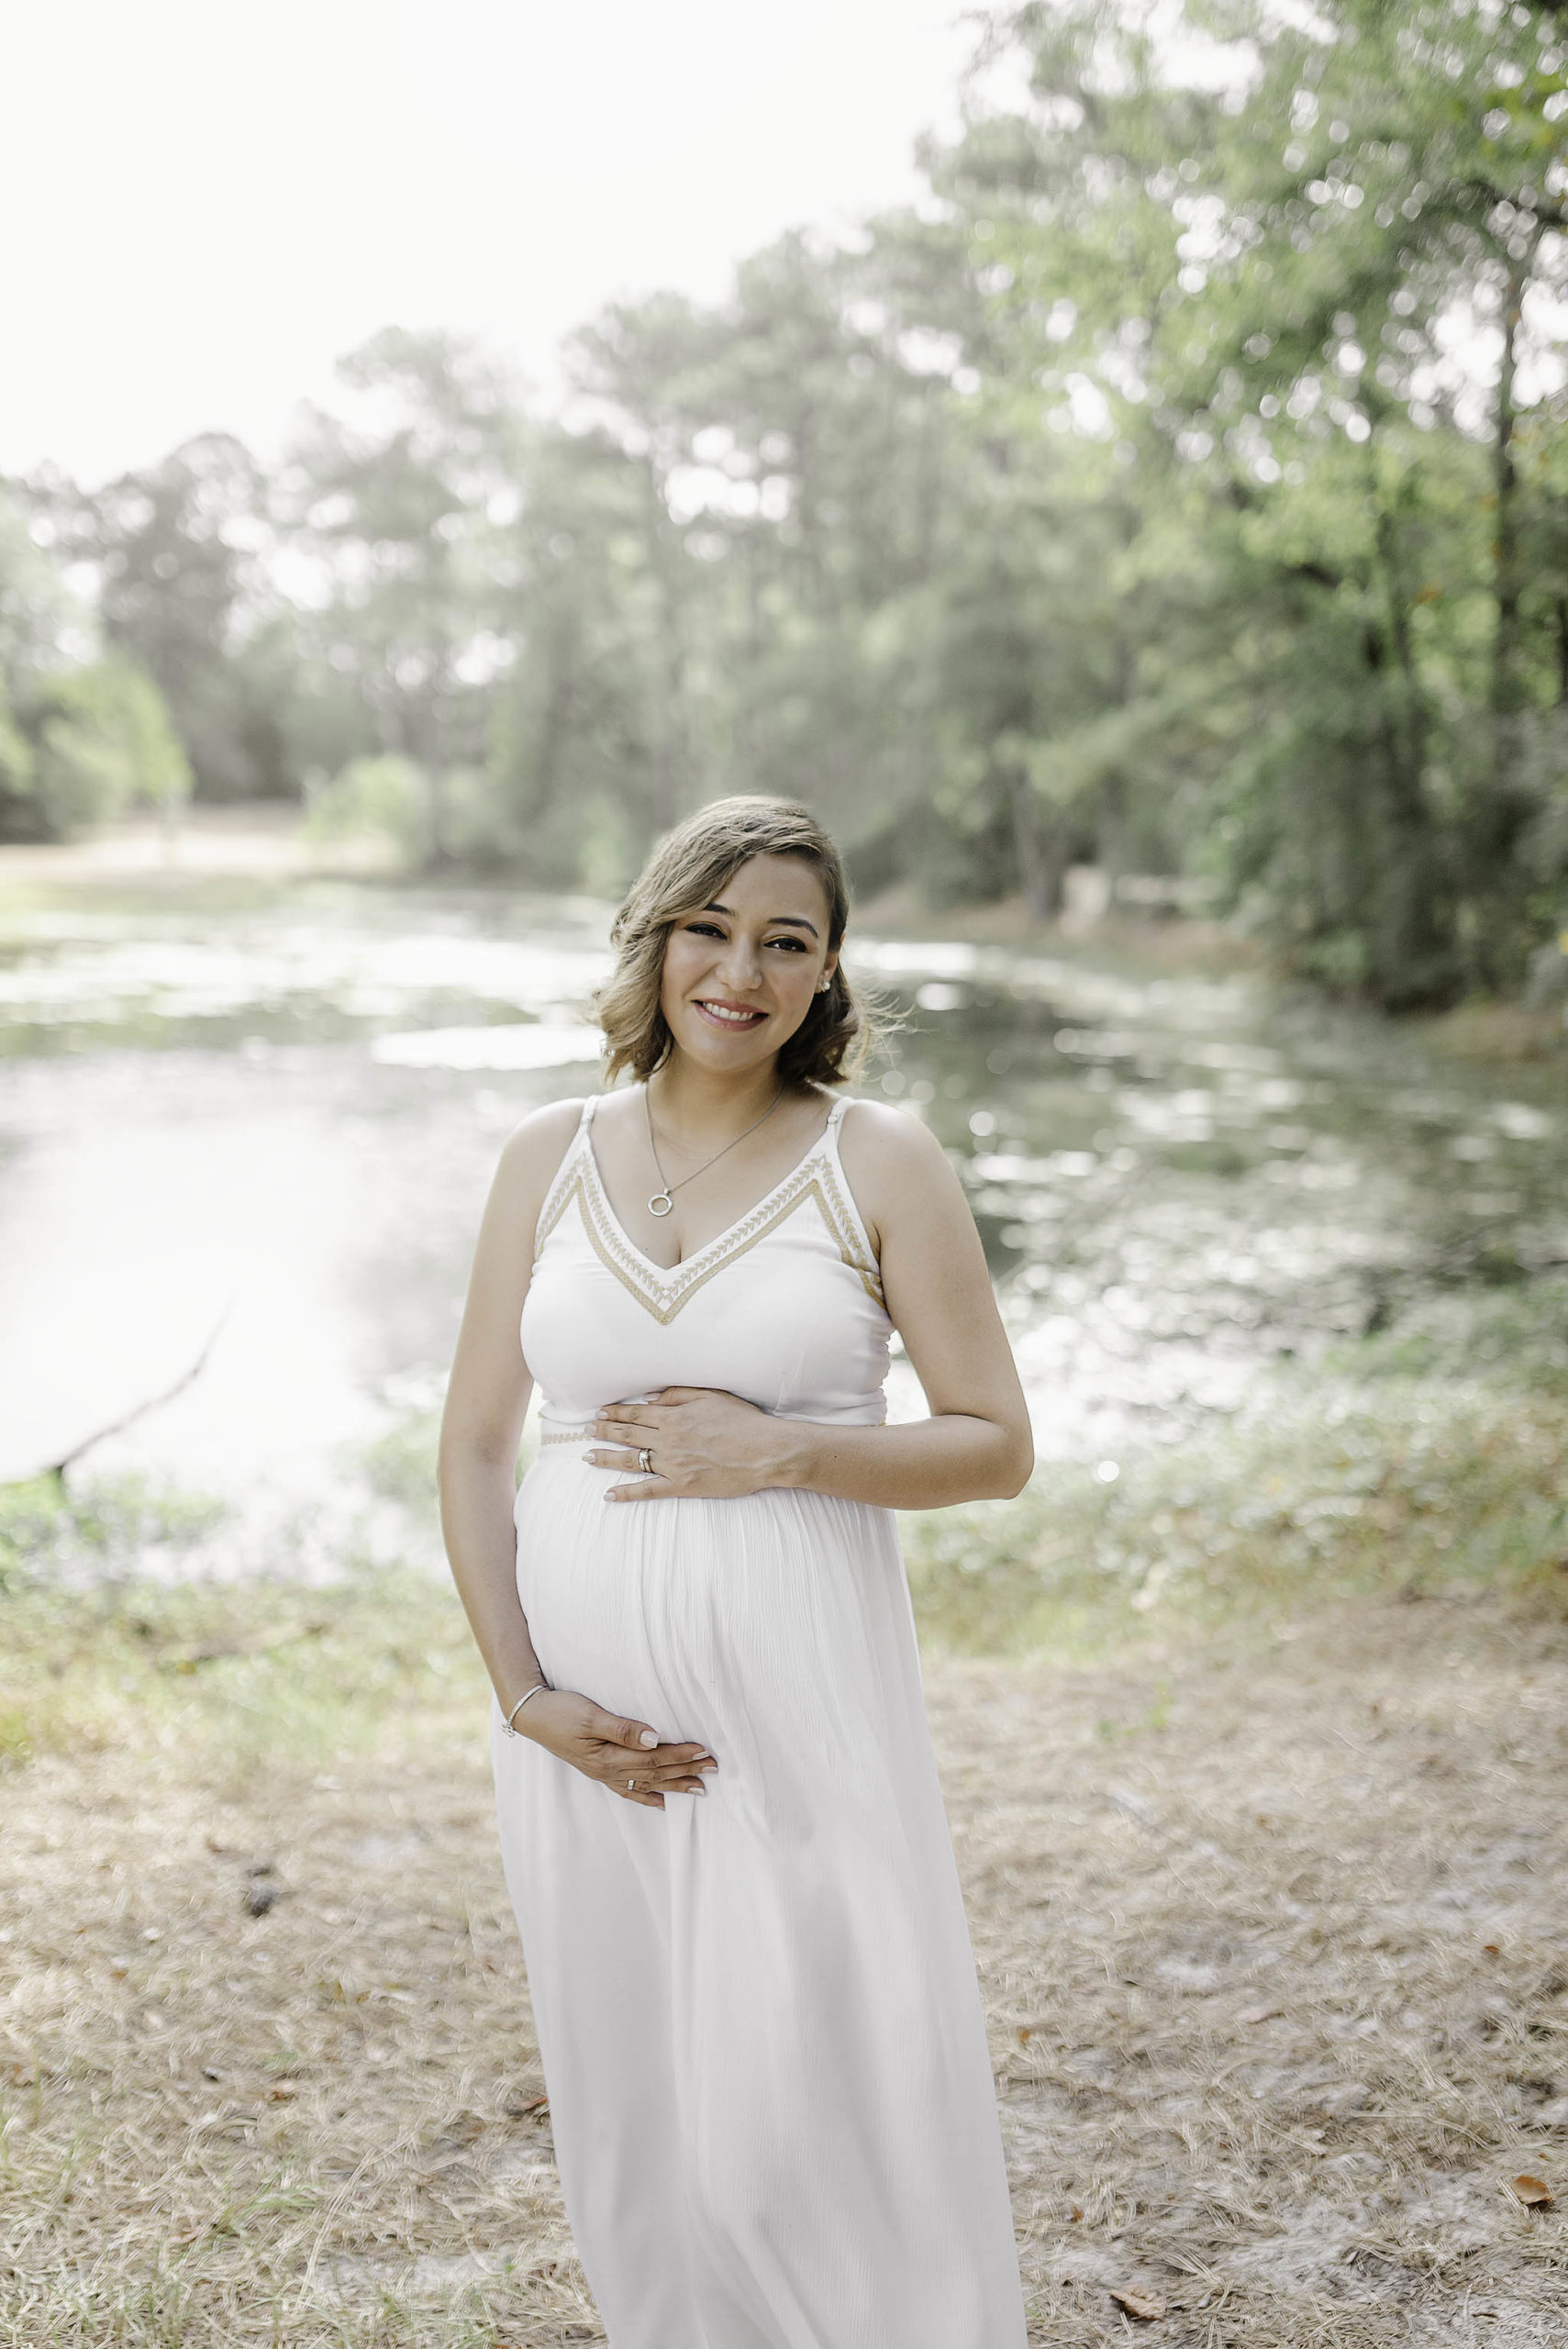 Morning Maternity Sessions - Houston Photographer Shannon Reece Jones